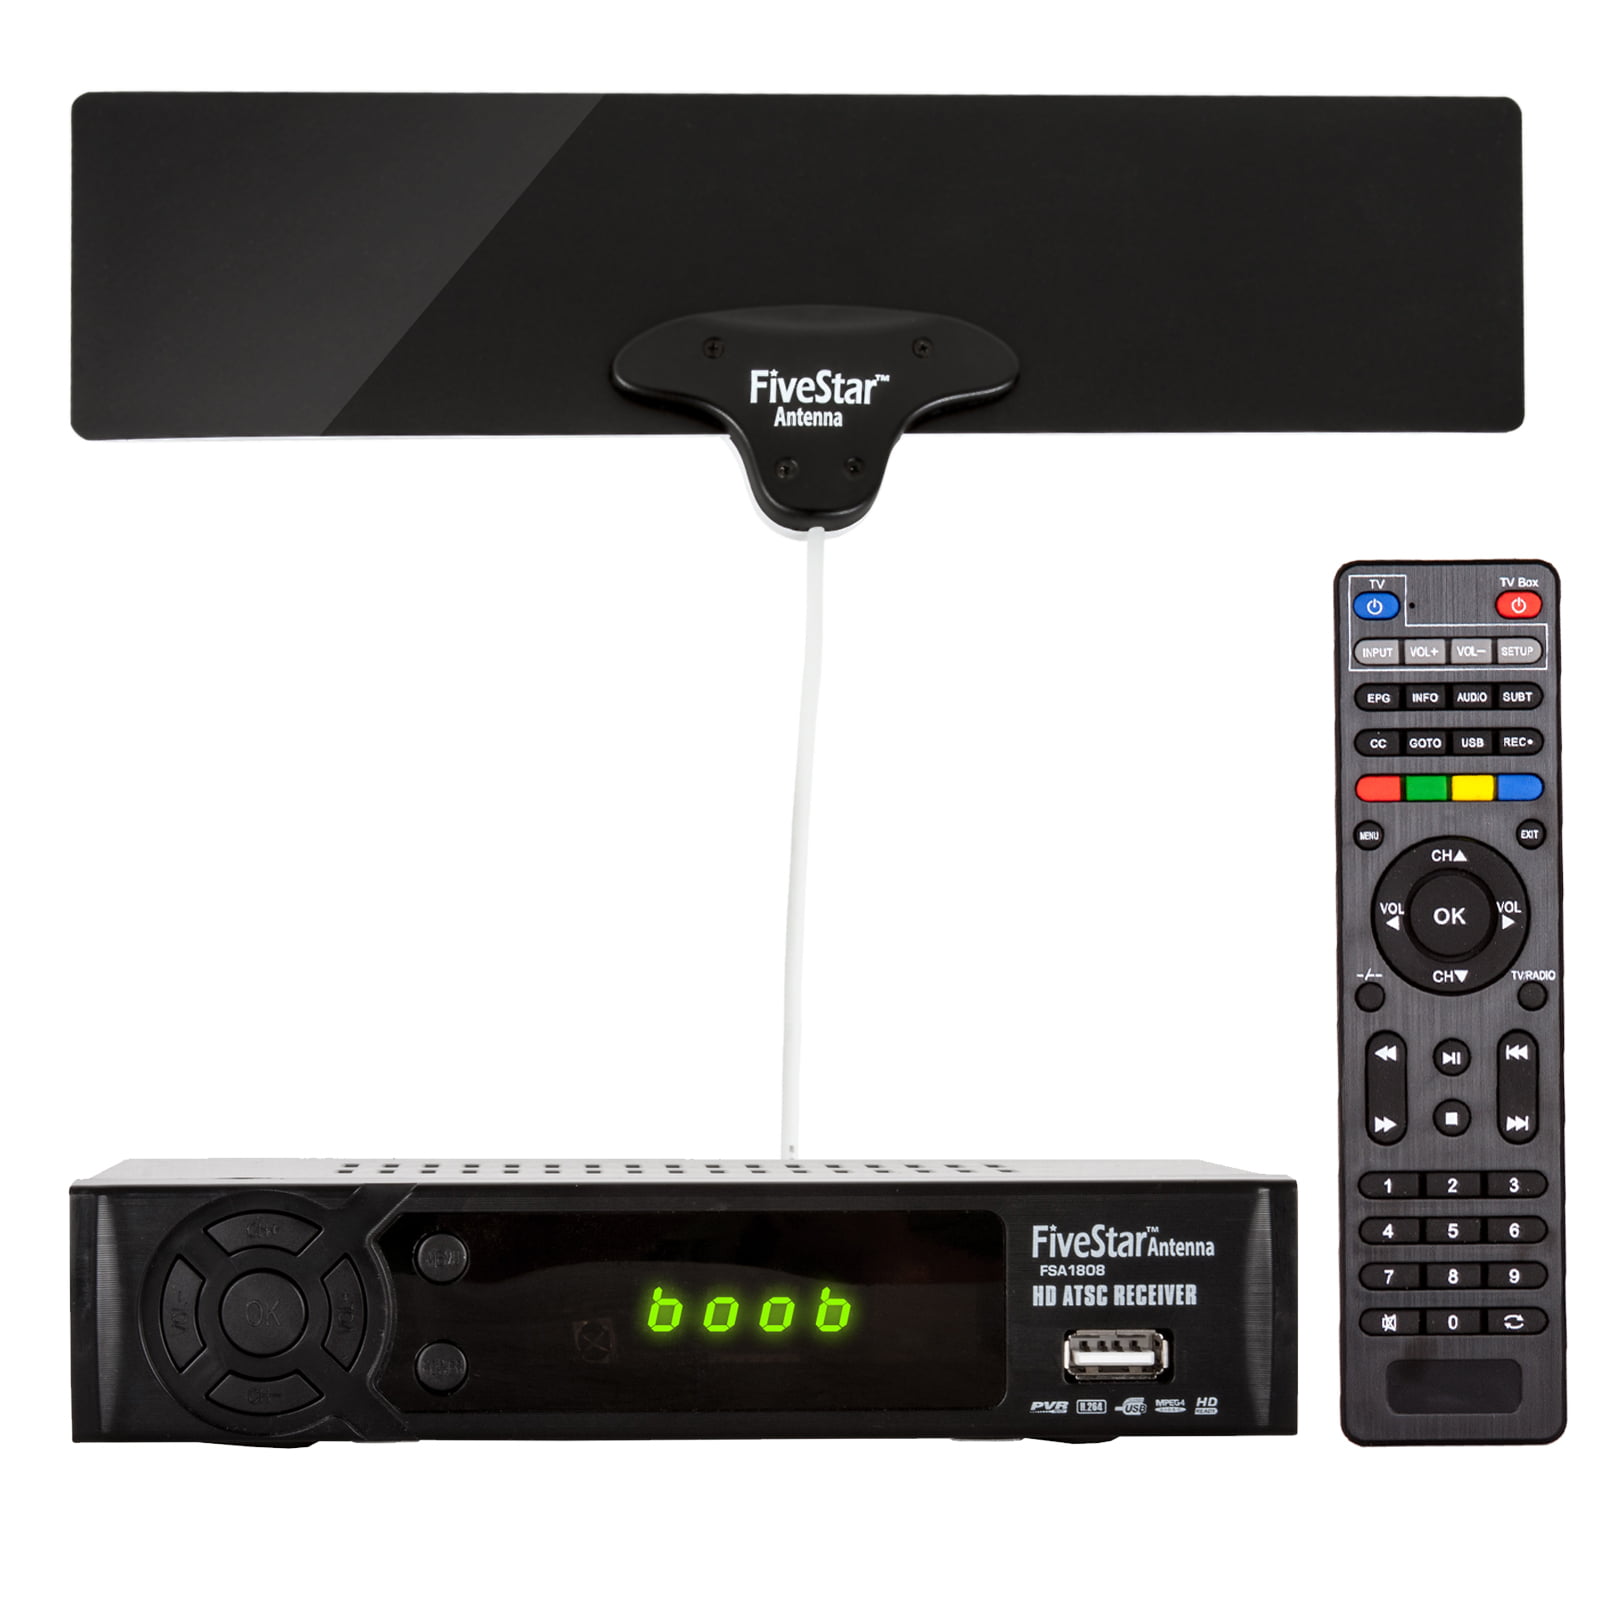 digital to analog tv converter review